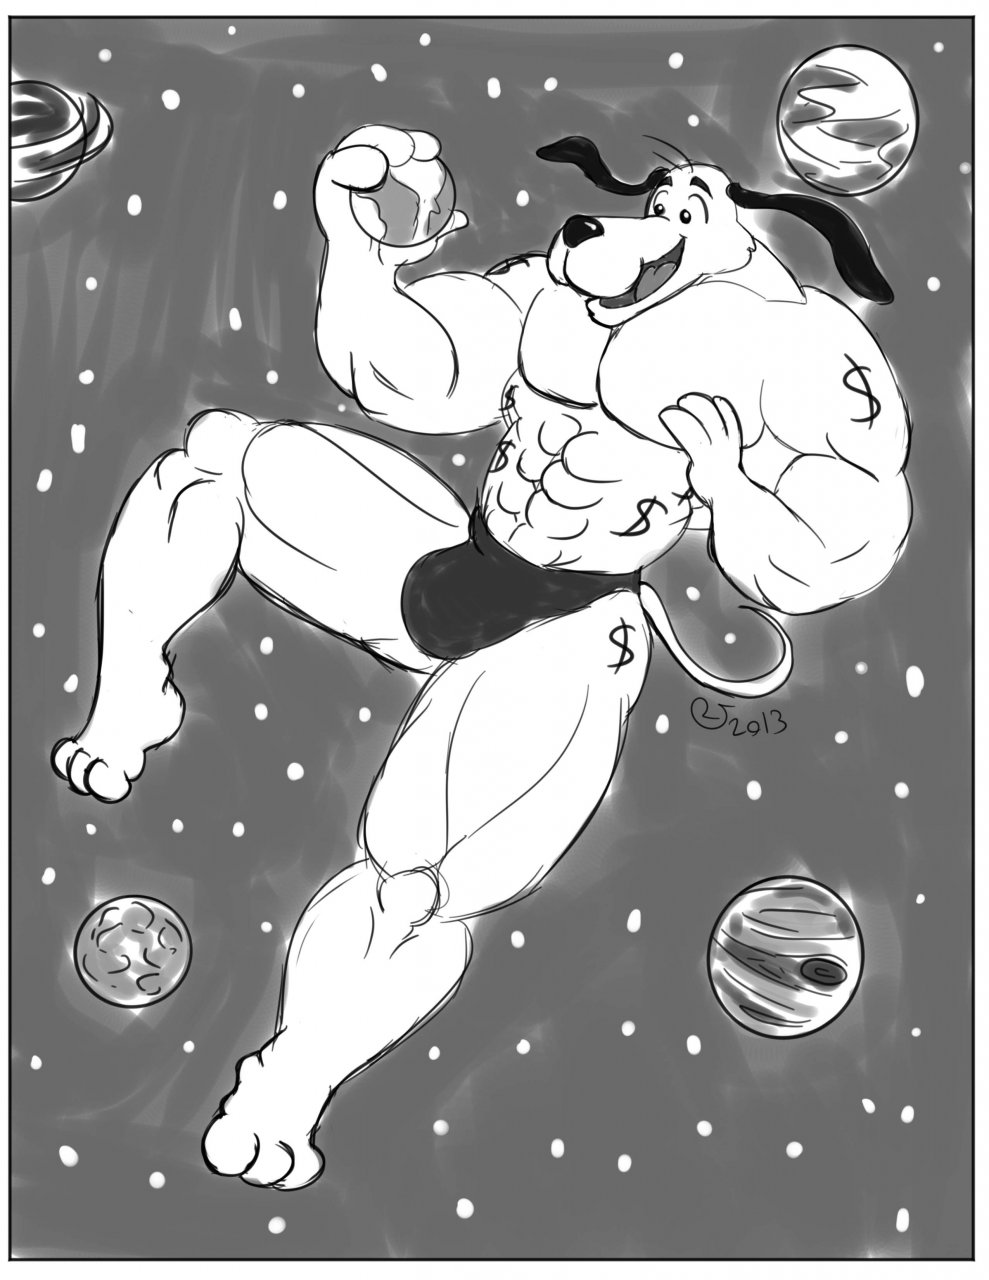 Dollar Muscle Max Comic Page 5/5 (Final) by CaseyLJones